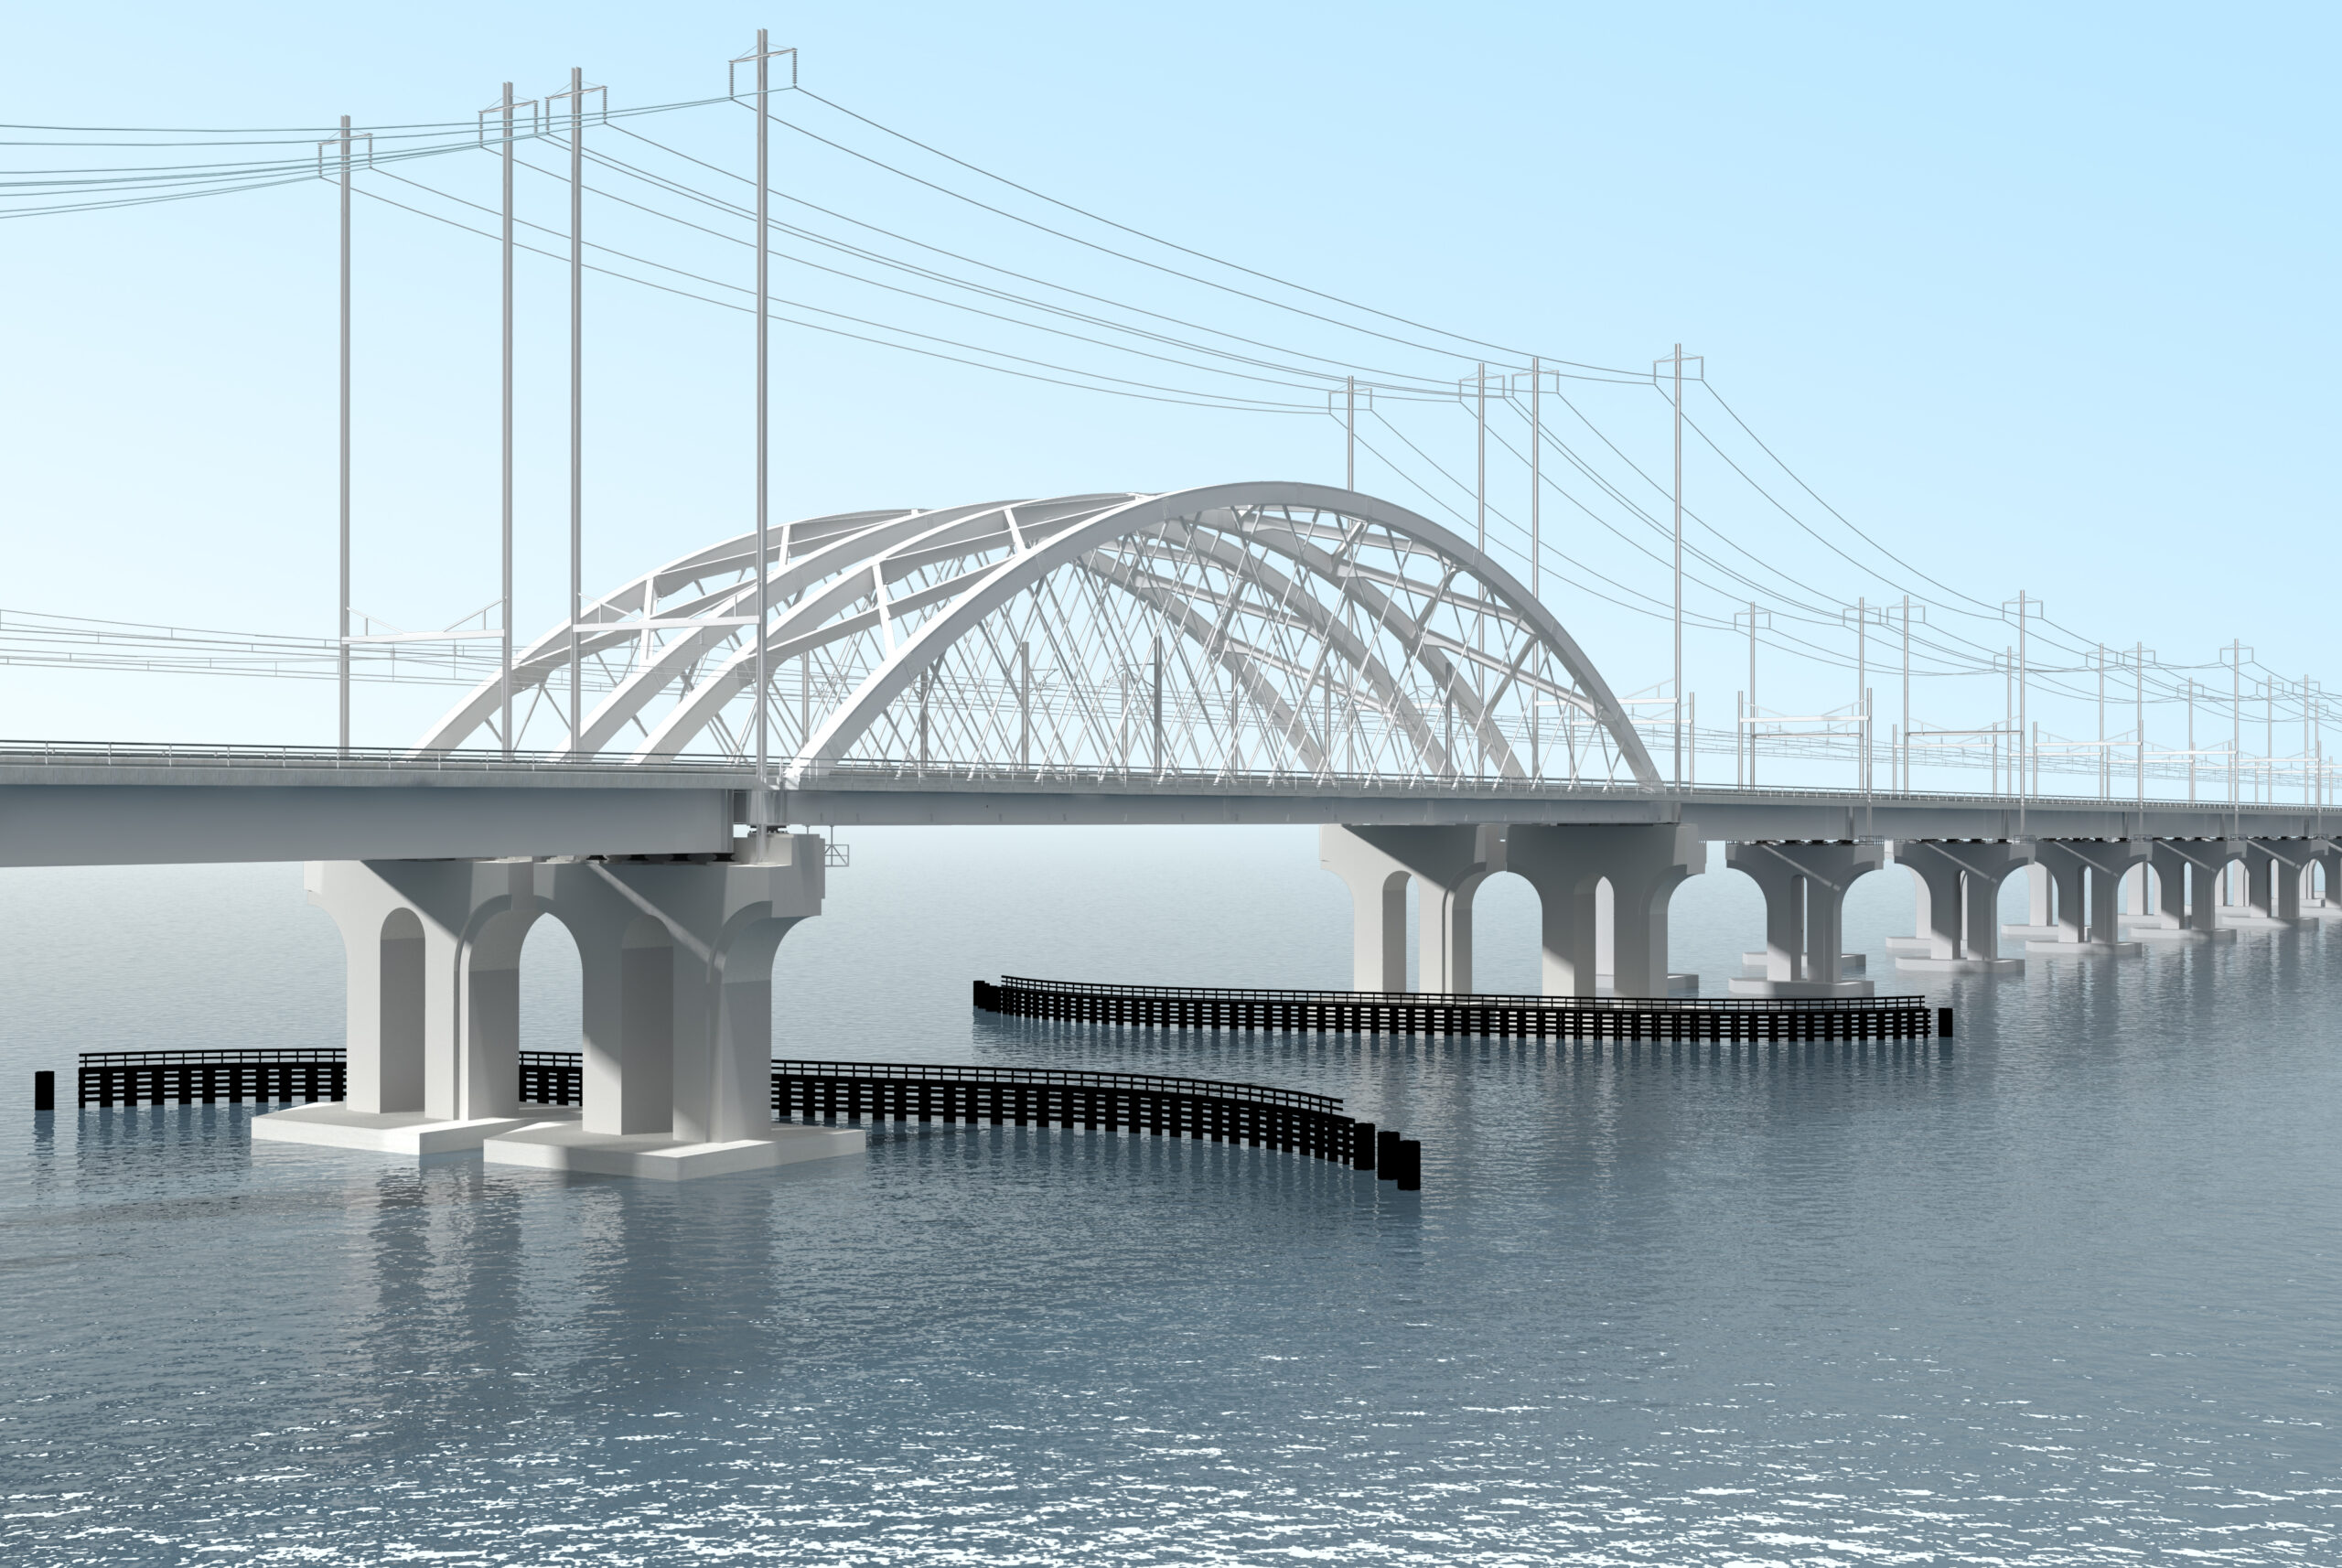 Susquehanna-River-Bridge-Project-Image-s